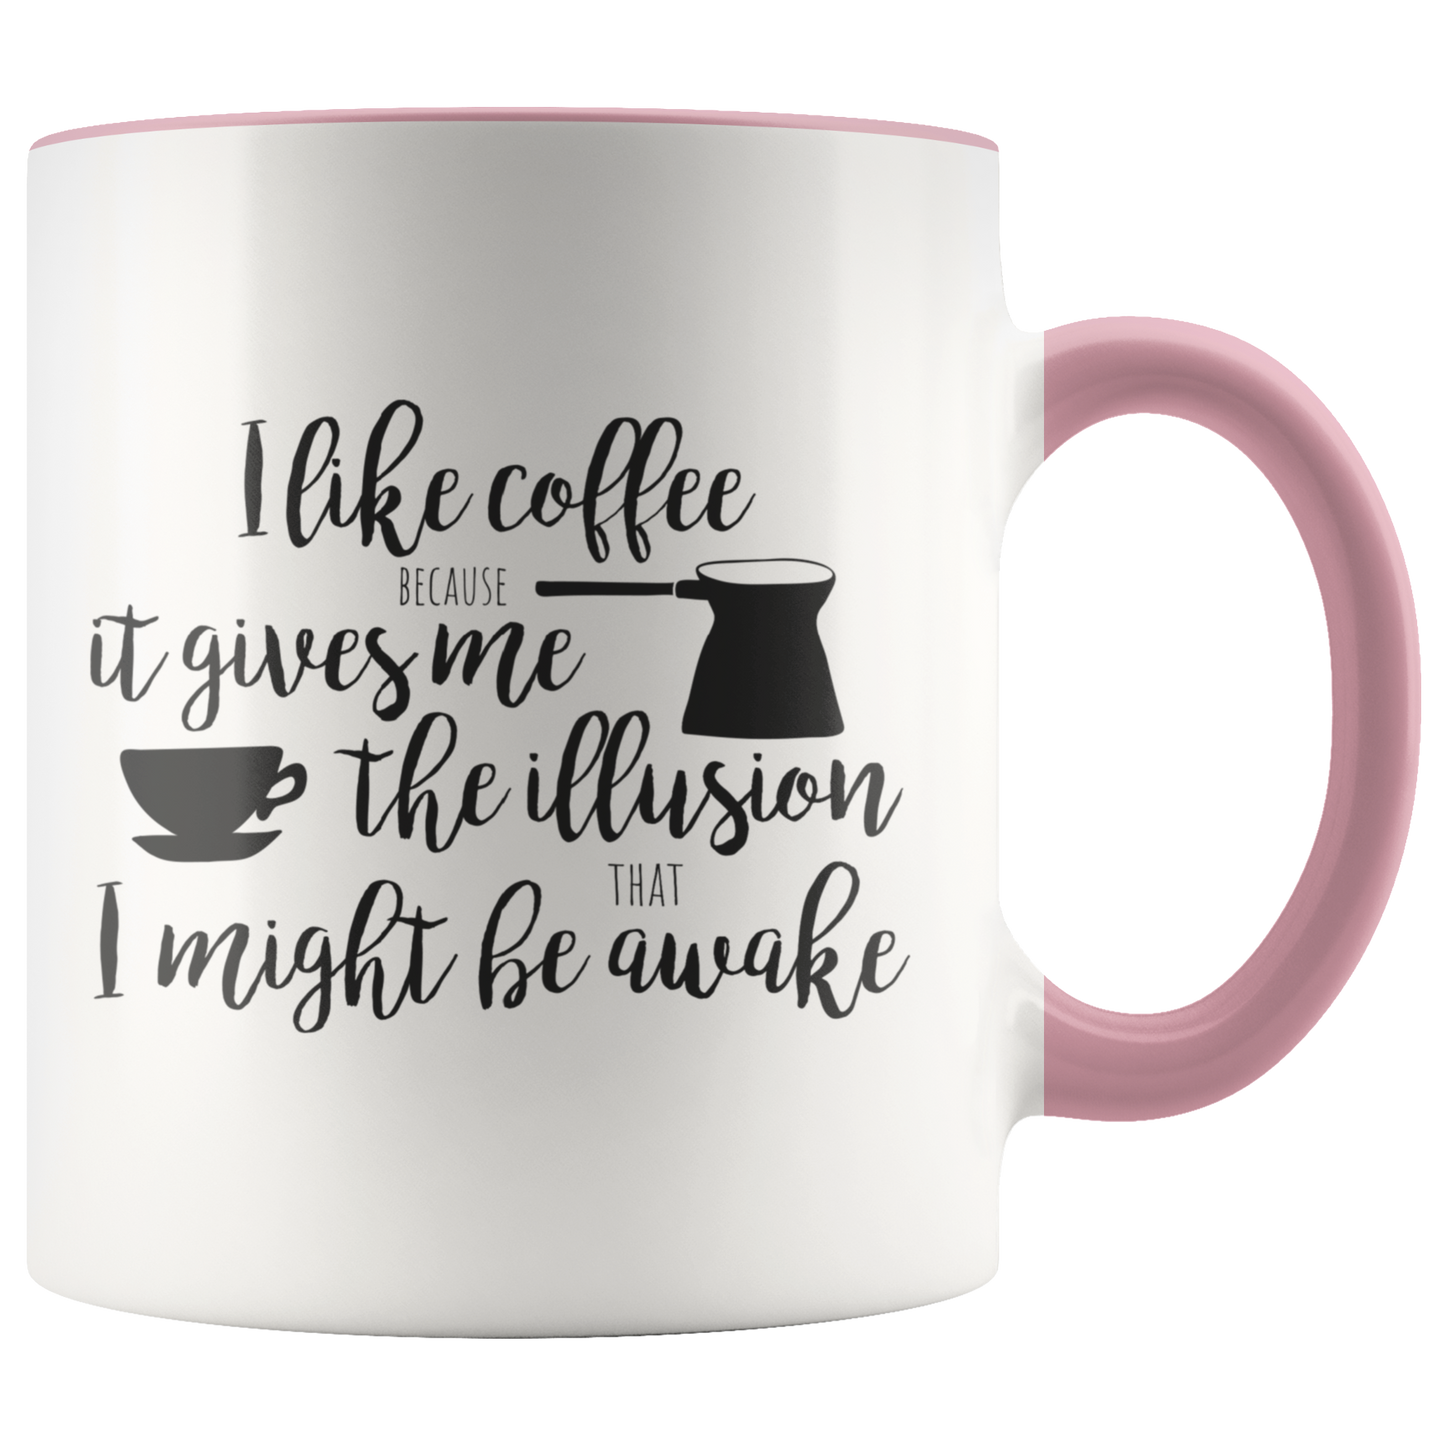 Funny Coffee Mug Coffee Lovers Gift Ceramic Tea Cup Mug with Funny Sayings